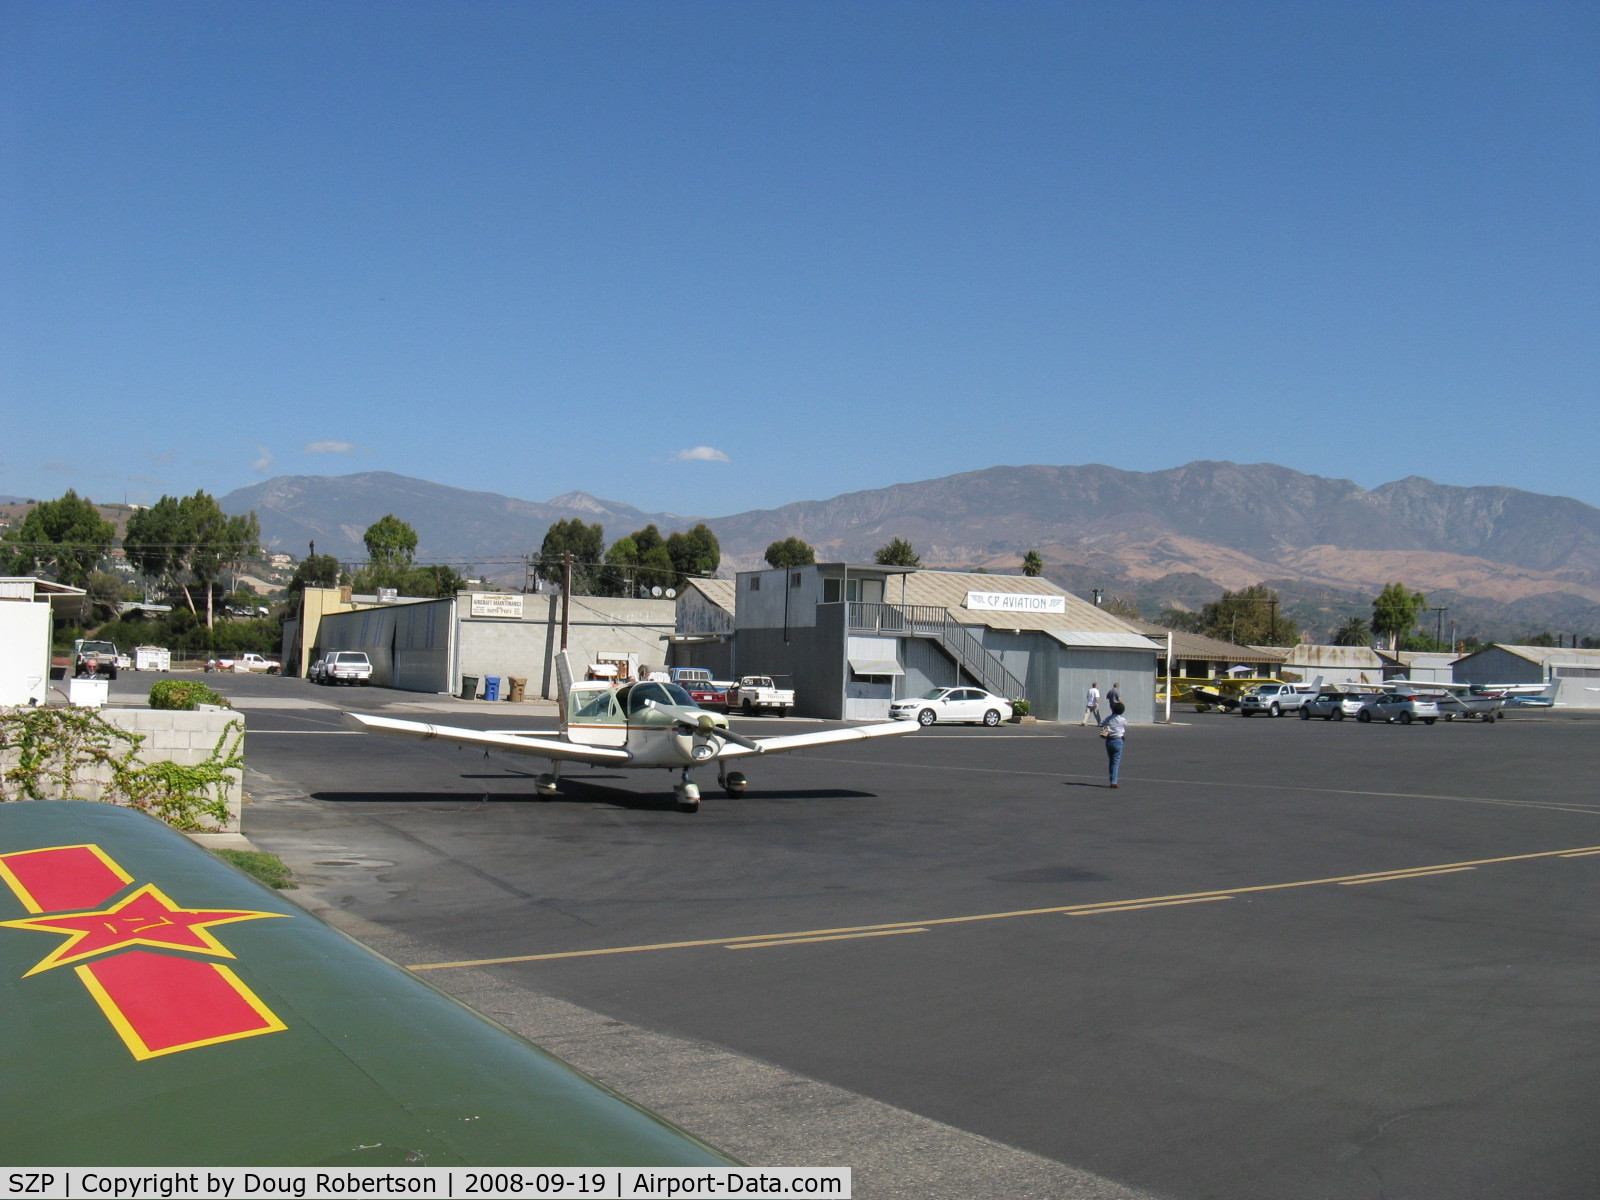 Santa Paula Airport (SZP) - Taxi past mid-field self-service fuel dock, CP Aviation FBO beyond.